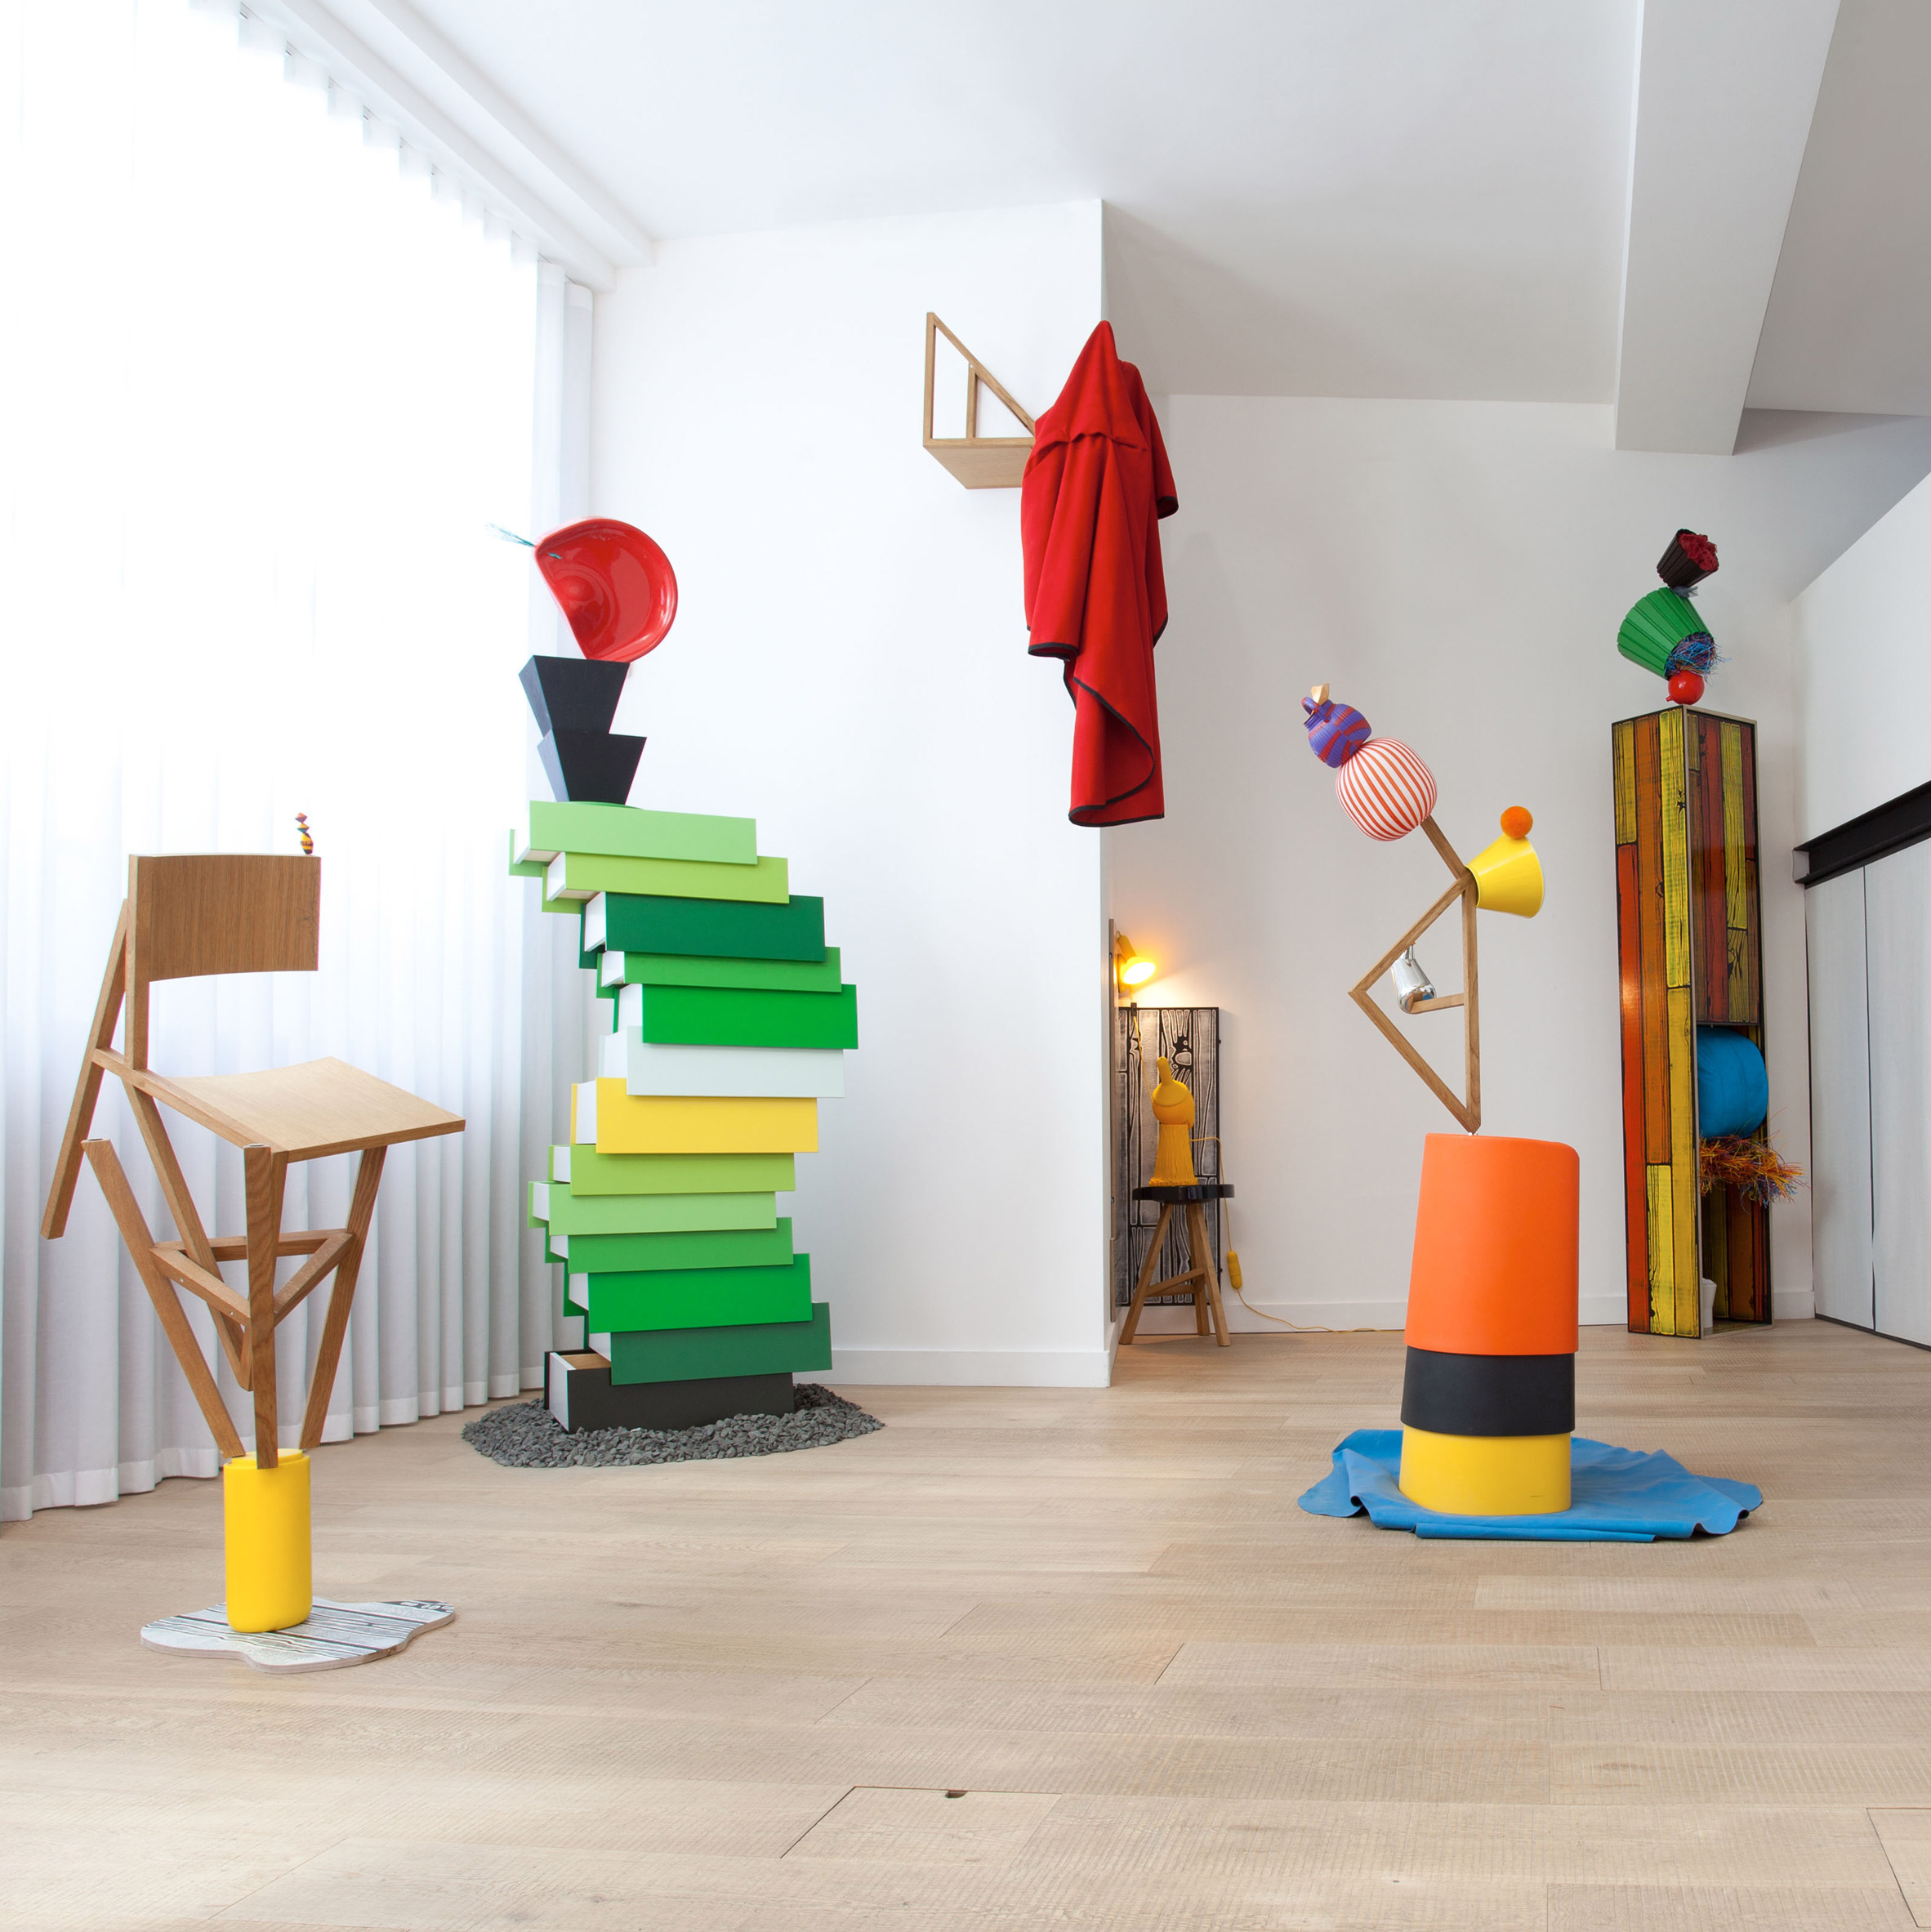 Lorenzo Vitturi repurposes Established & Sons furniture for sculptural installation